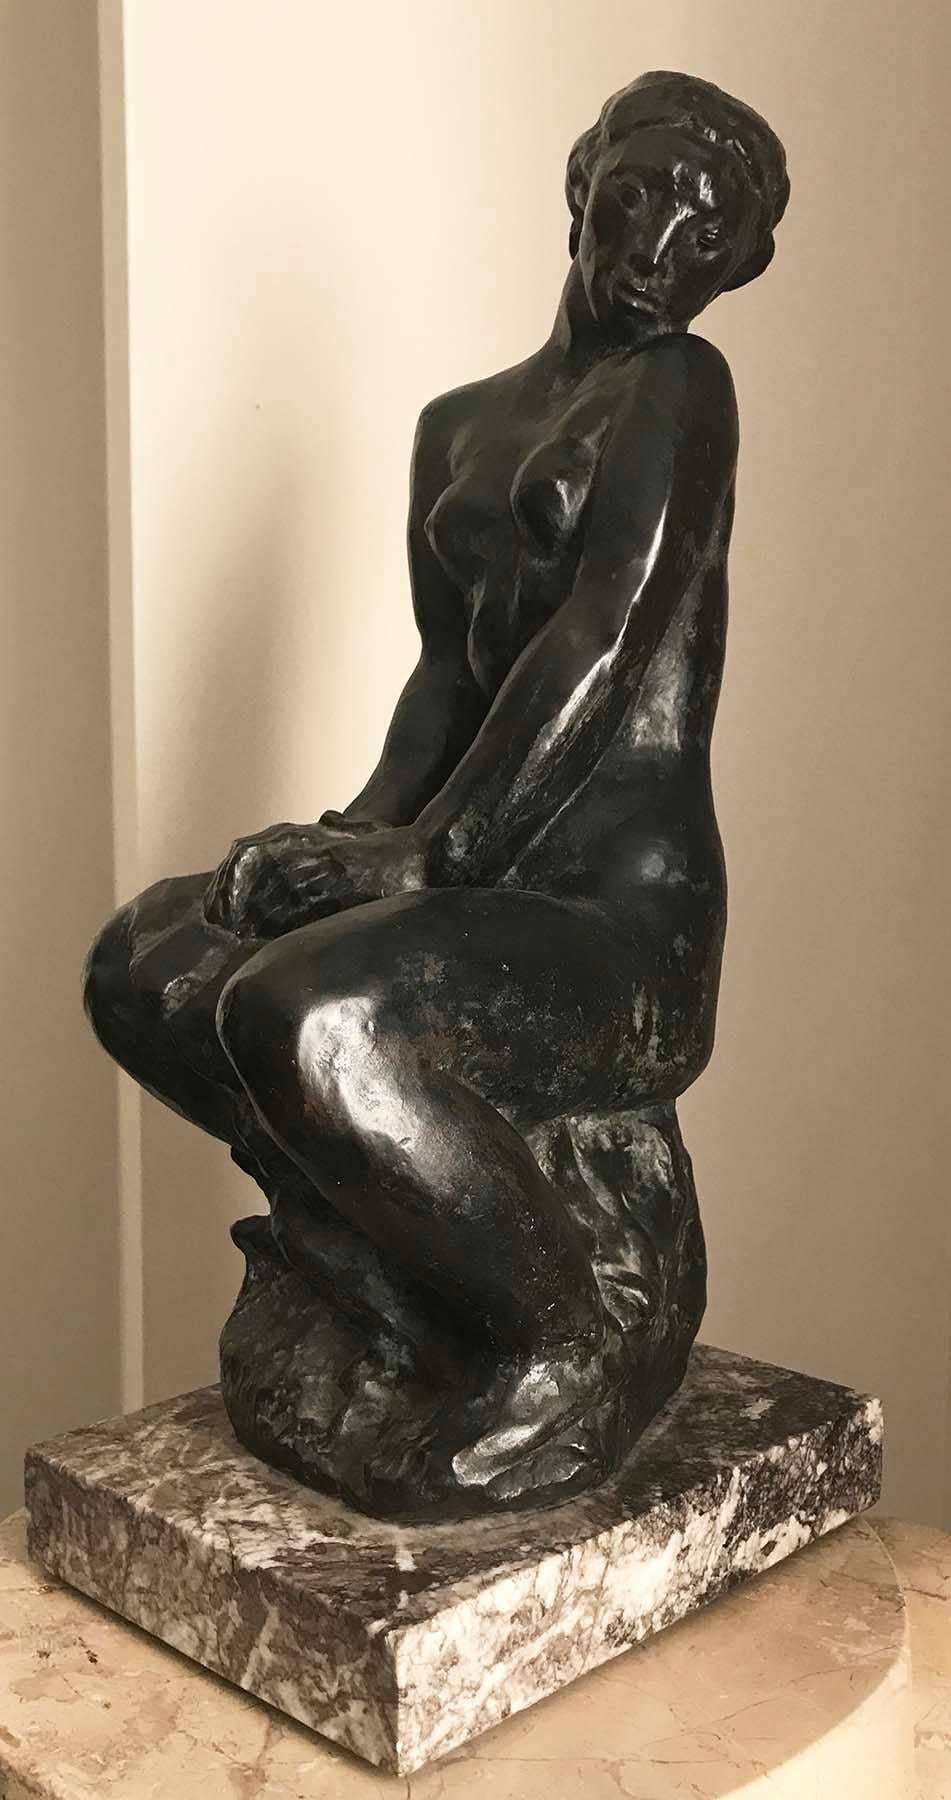 Troiano Troiani Figurative Sculpture - Seated Nude